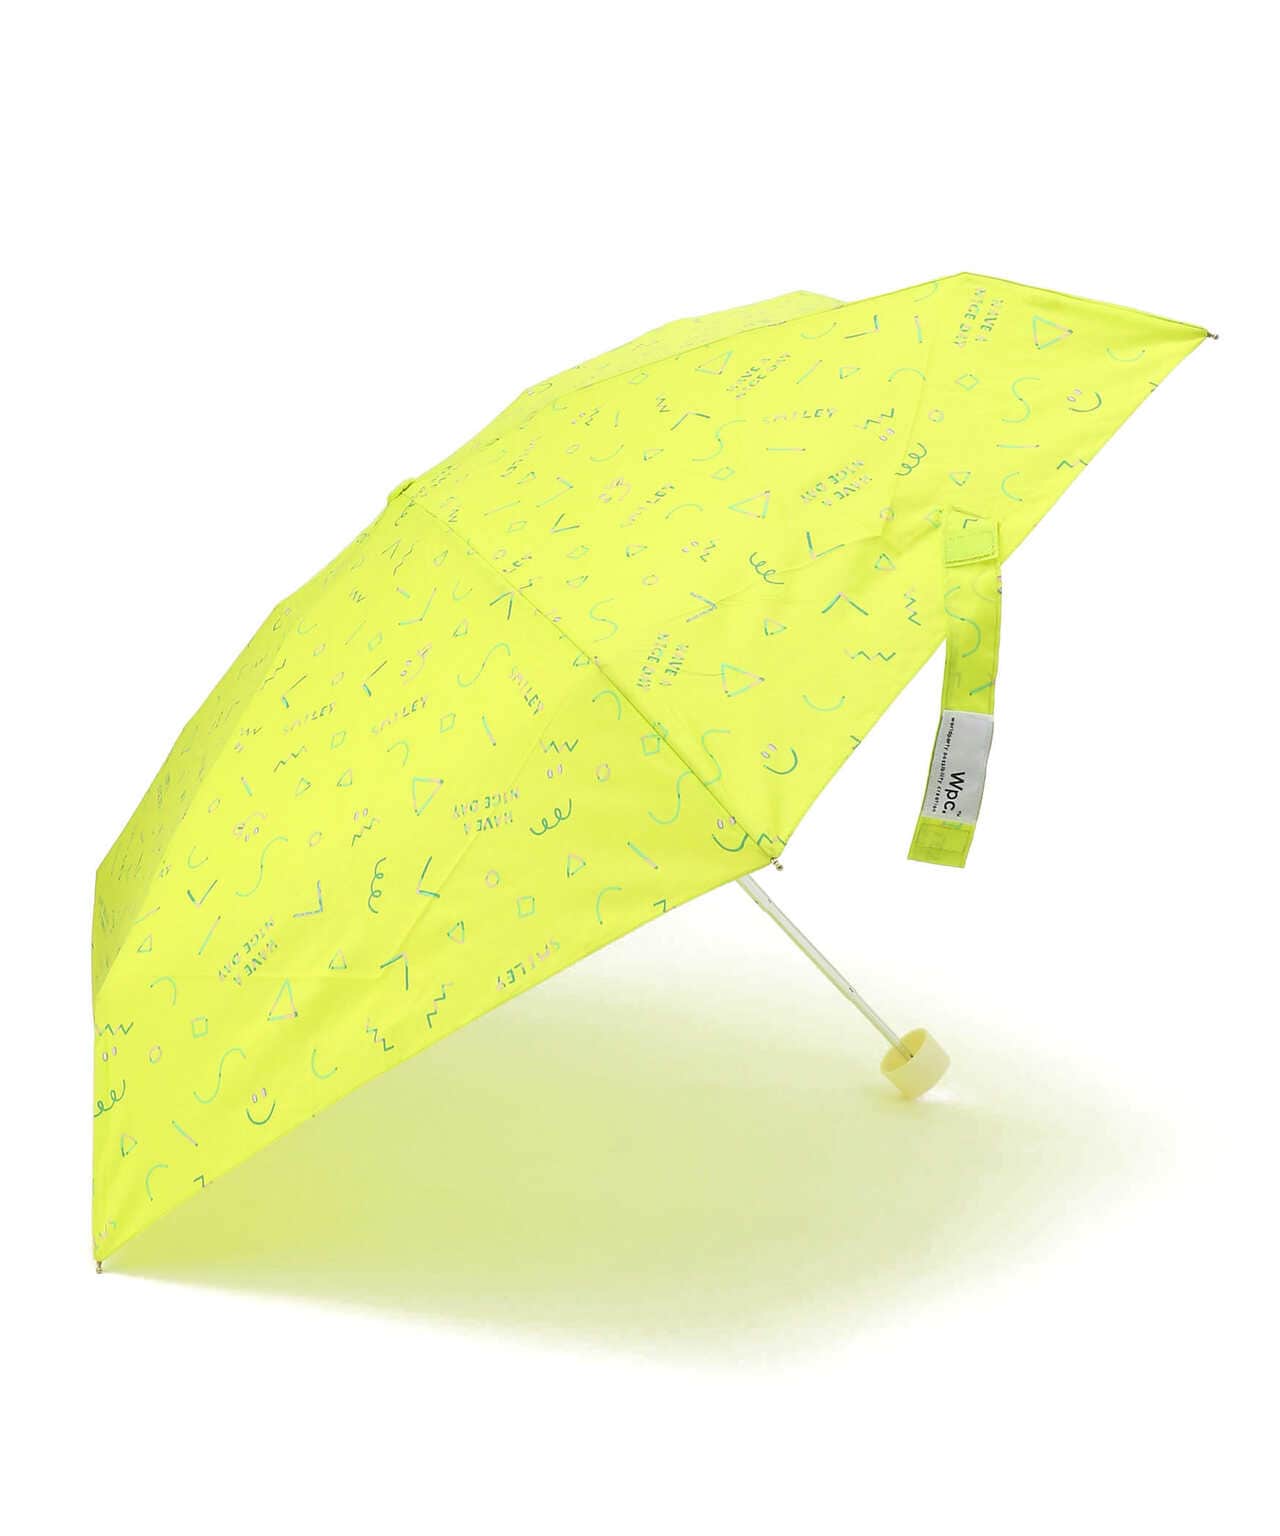 Wpc.（ダブリュー・ピー・シー）晴雨兼用/MINI UMBRELLA/折り畳み傘